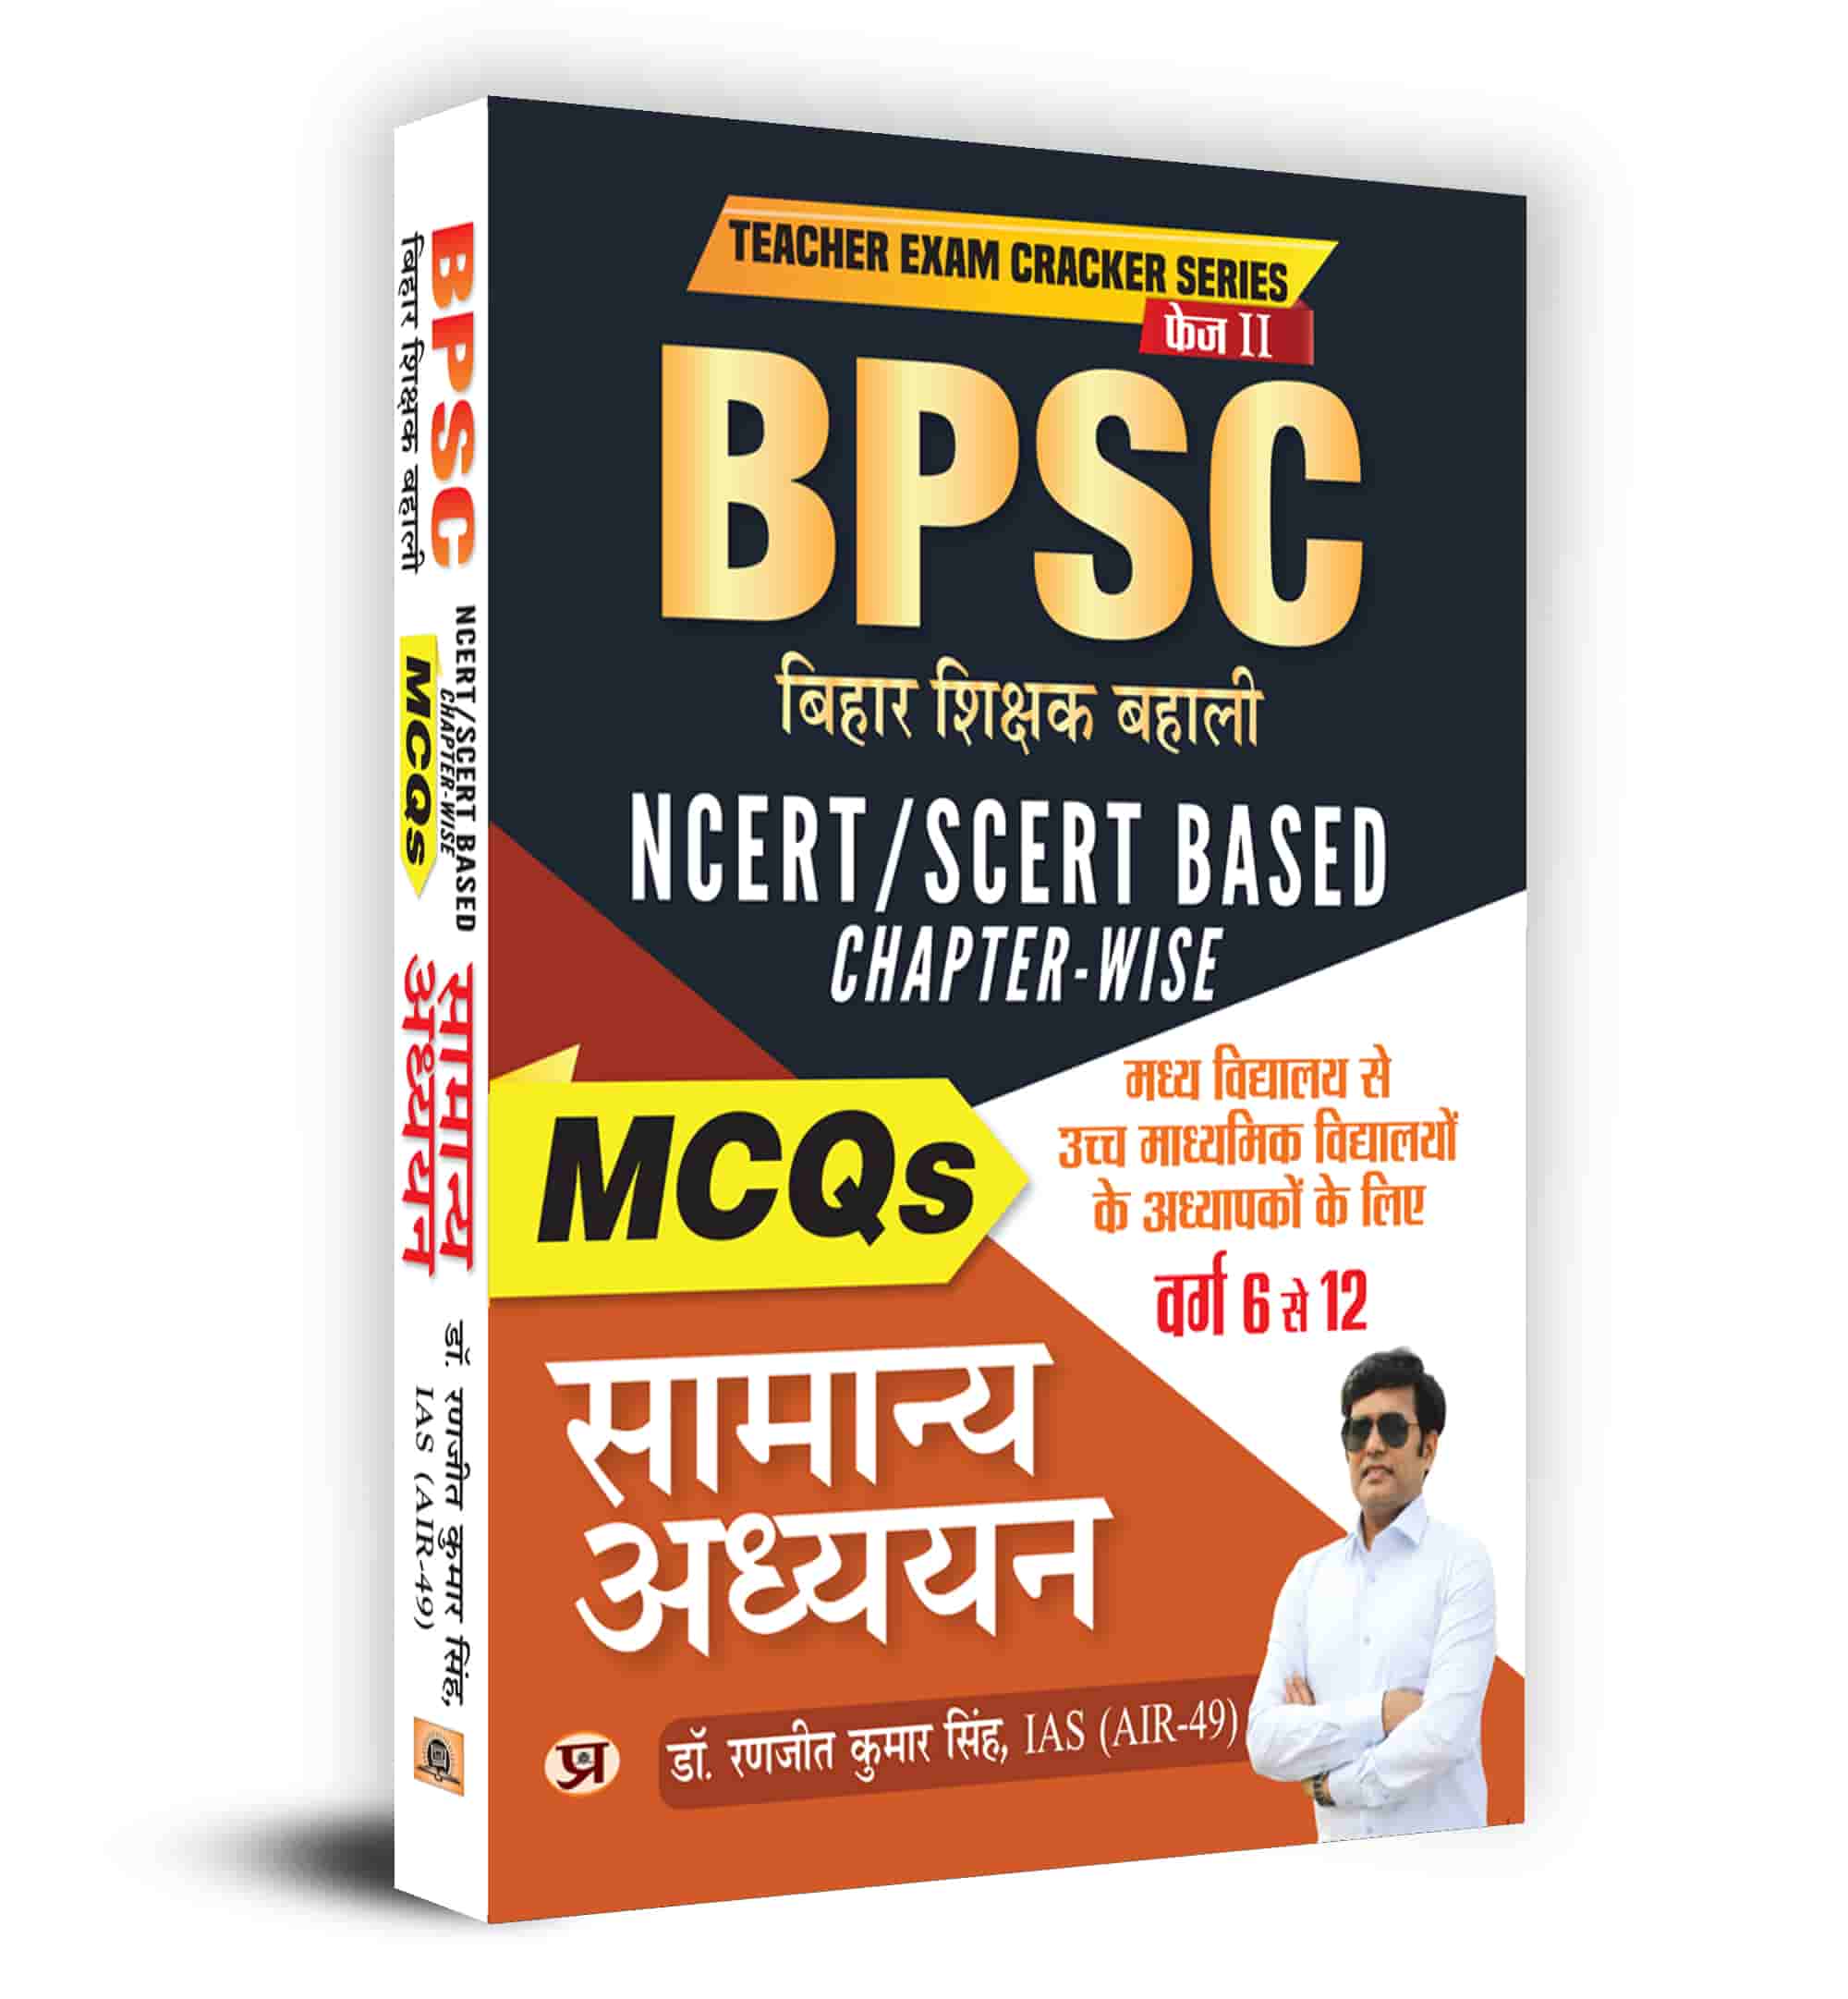 BPSC Bihar Teacher Recruitment NCERT/ SCERT Based MCQs Chapterwise Class 6 to 12 Samanaya Adhyayan (General Studies) Book in Hindi